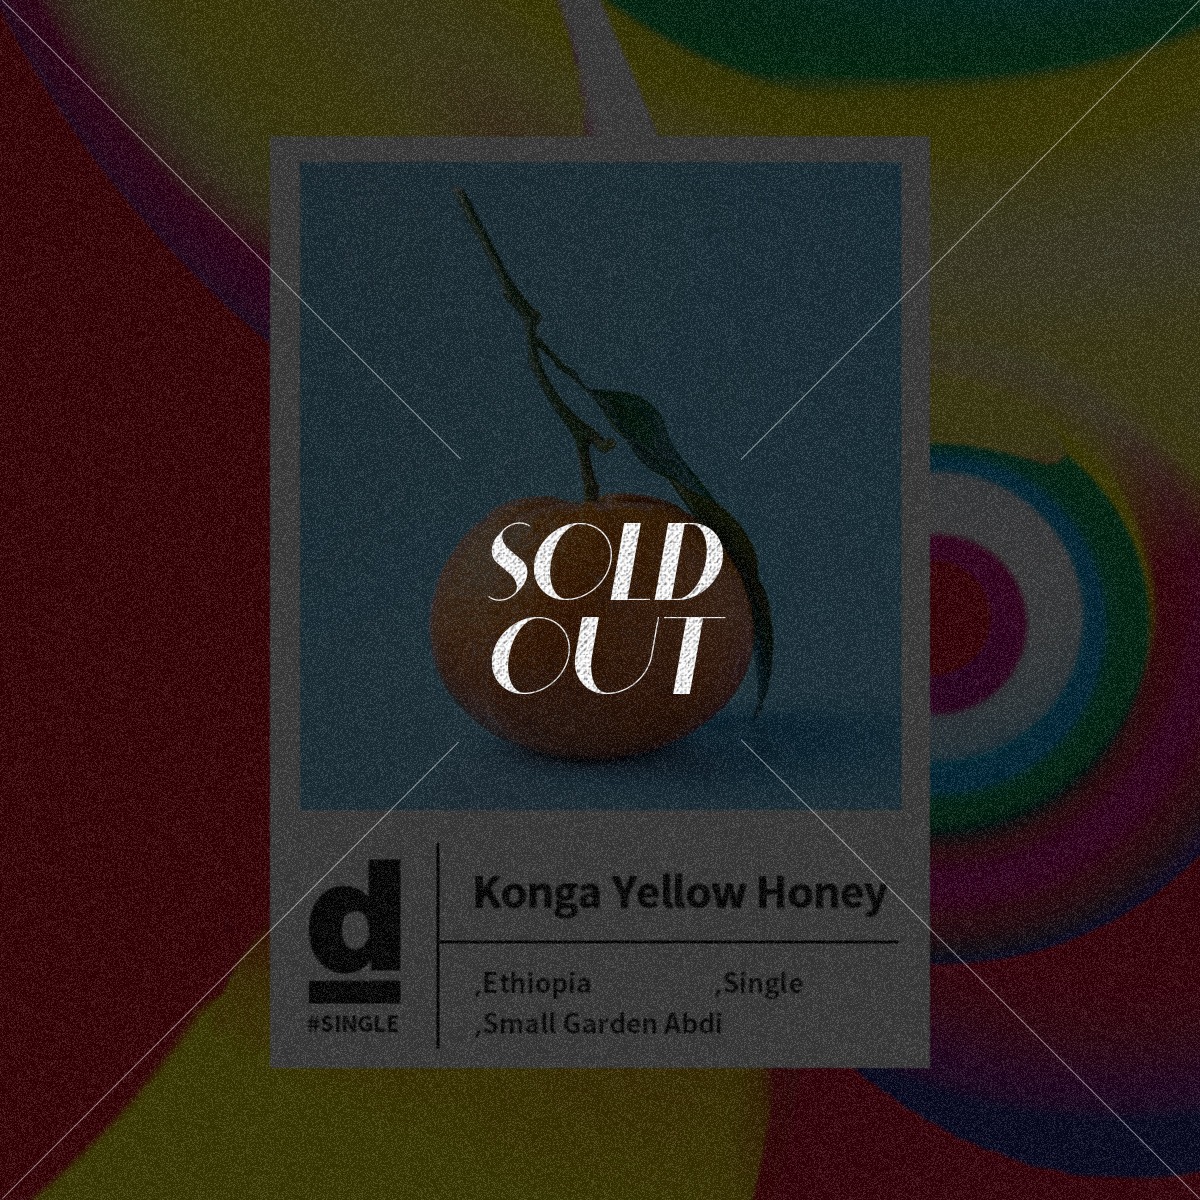 #Single Origin - Ethiopia Yellow Honey Konga G1 W.ABDI